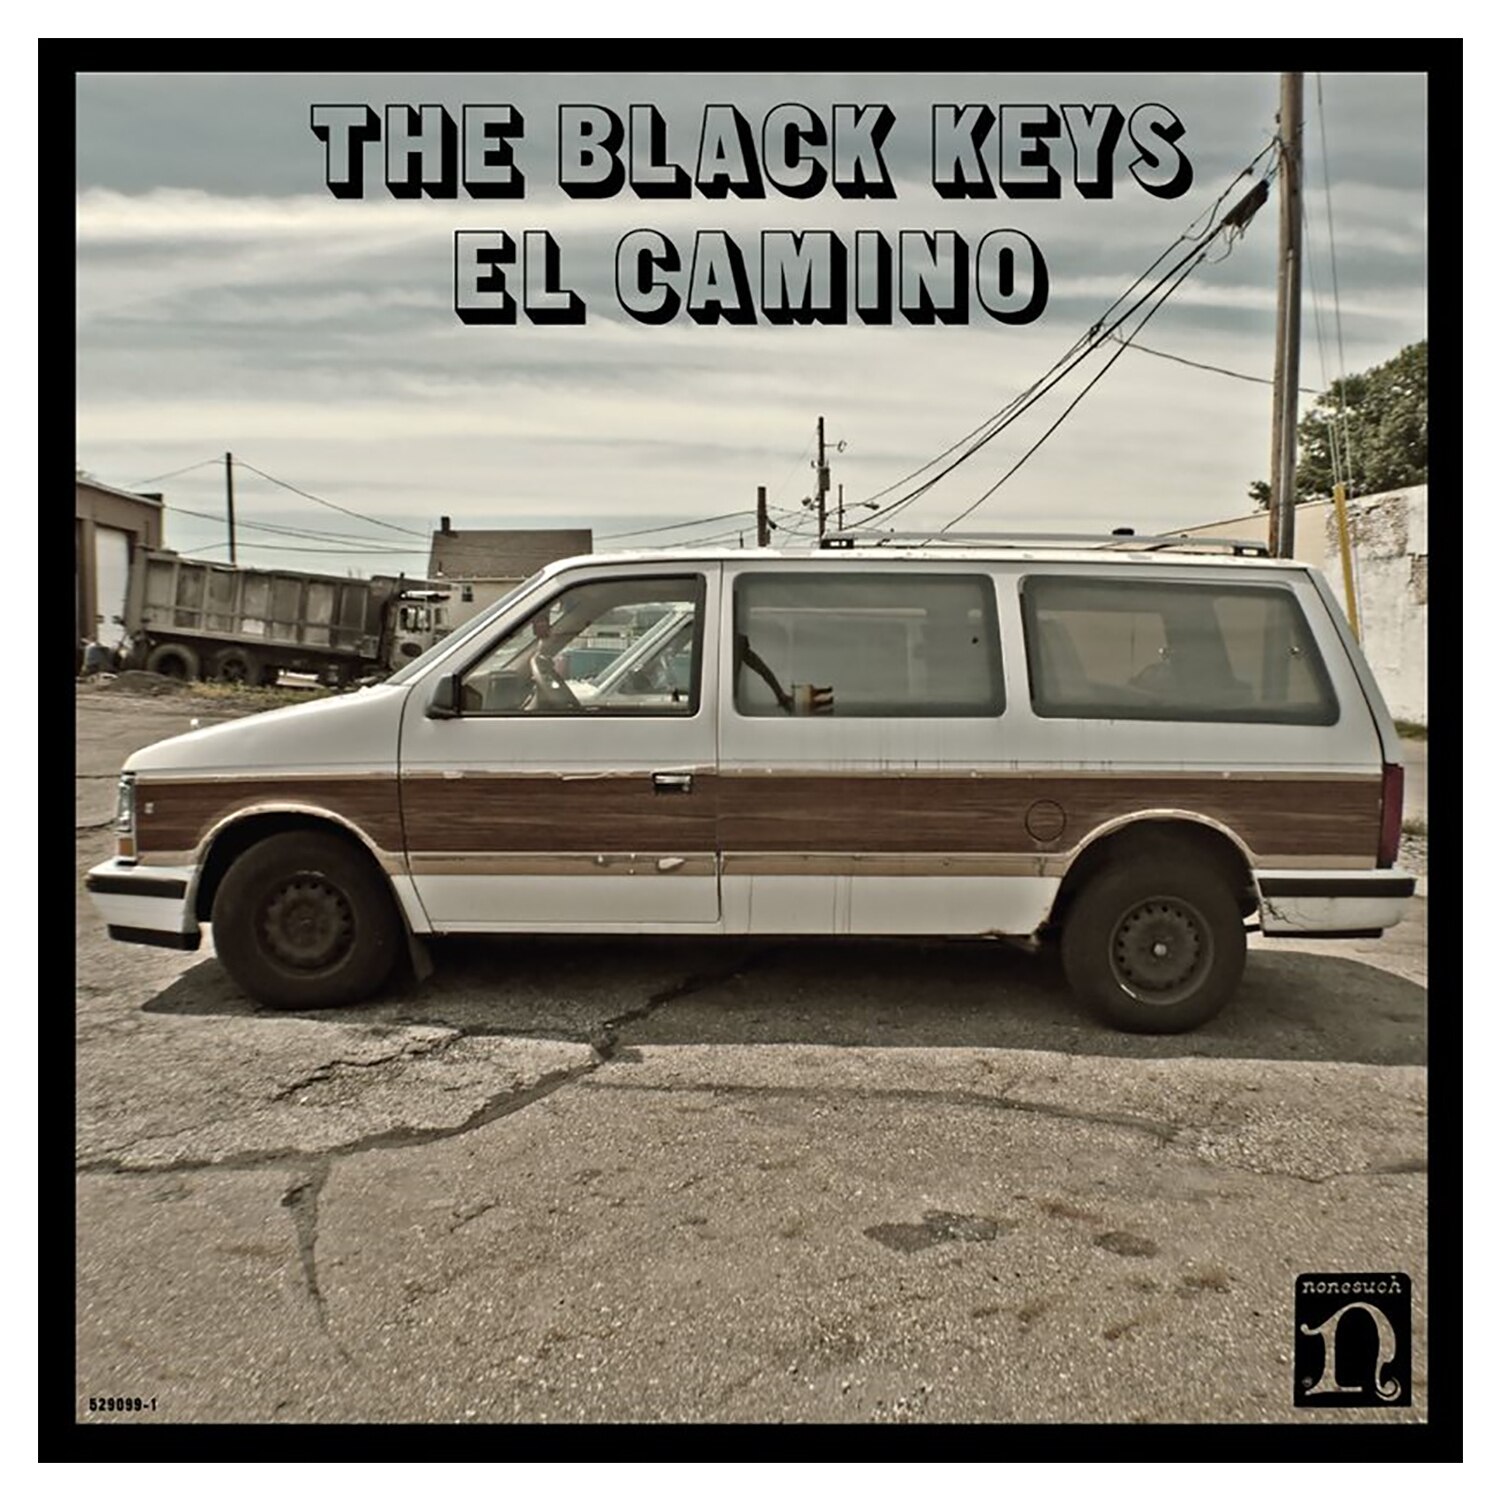 EL CAMINO -- BLACK KEYS THE